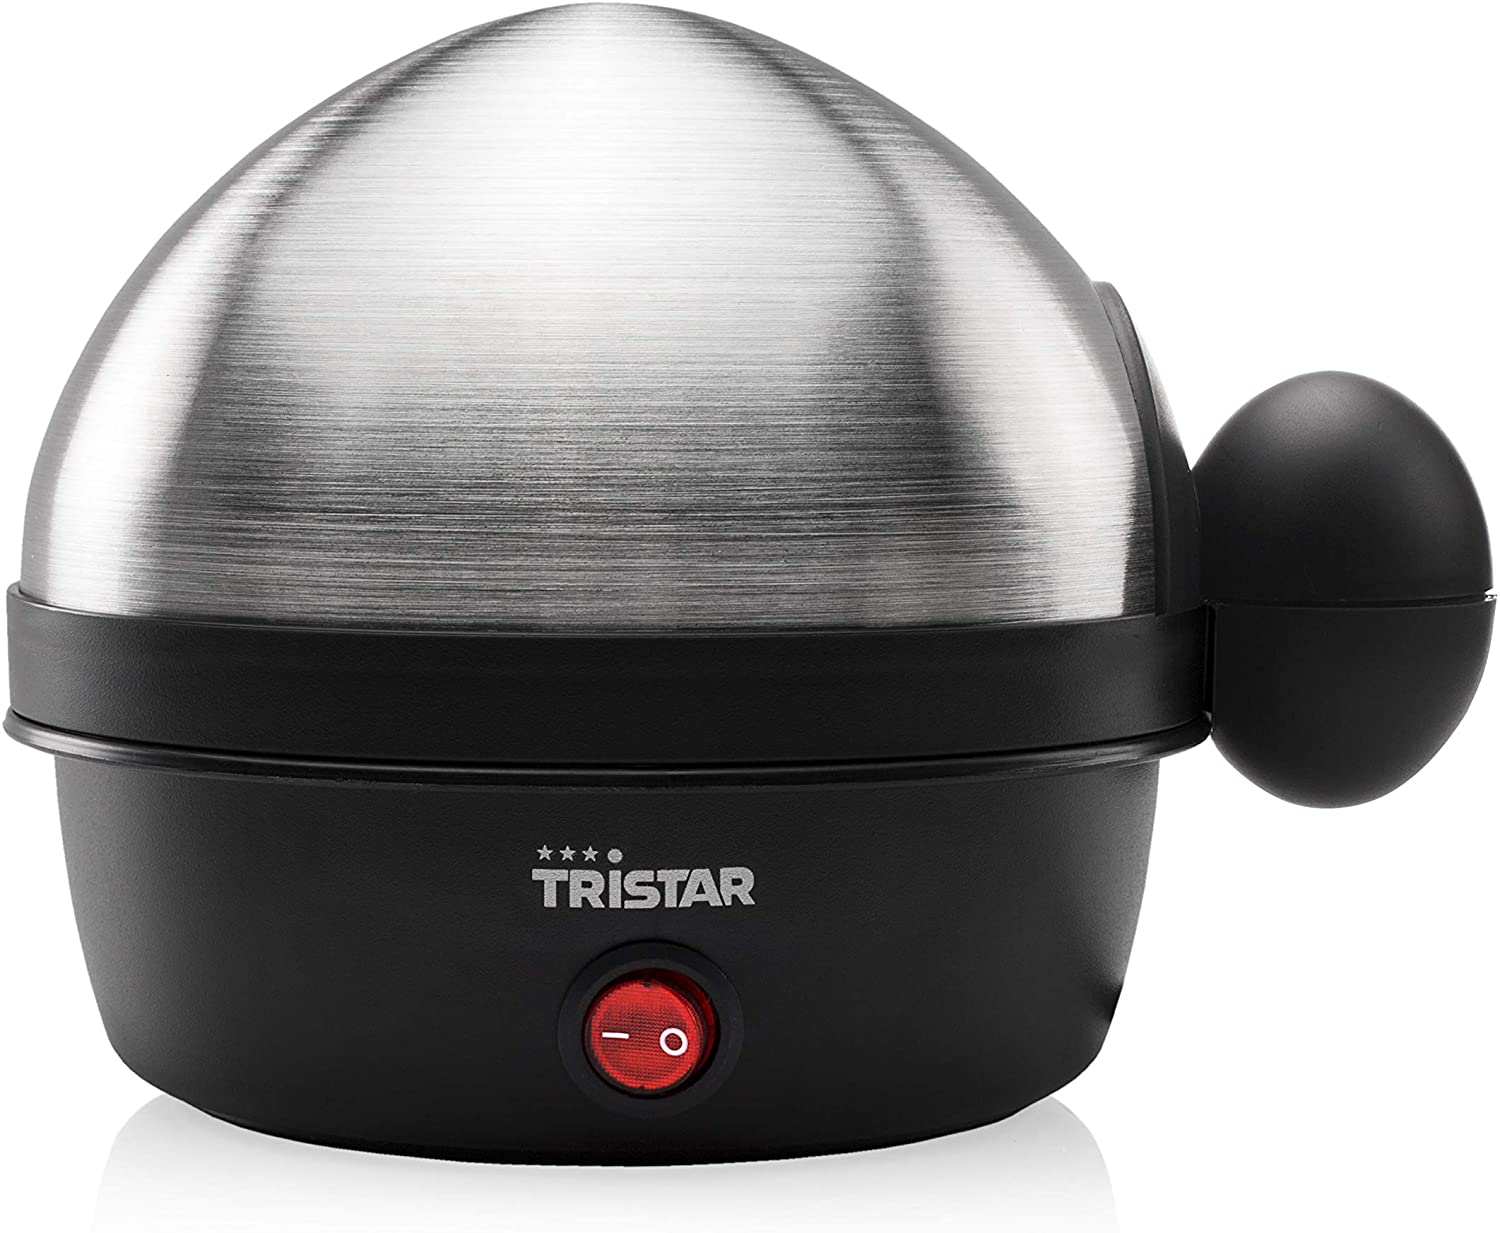 Tristar Tri-Star EK-3076 Electric Egg Boiler with 7 Egg Capacity